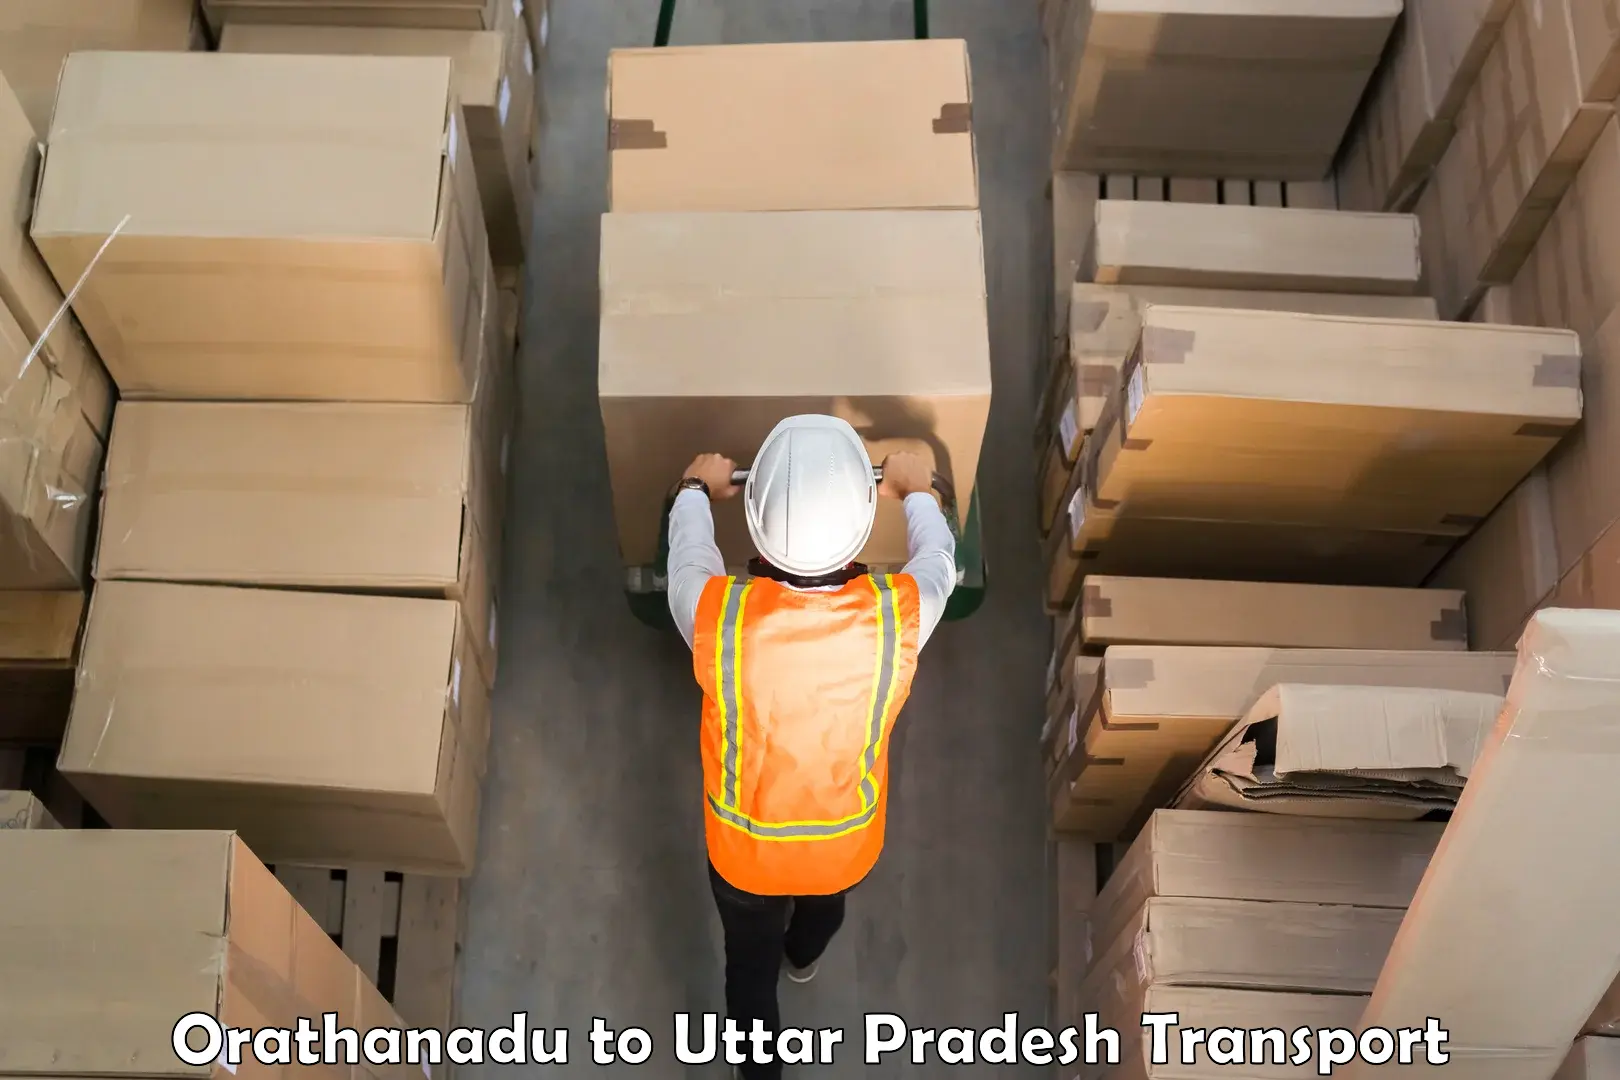 Truck transport companies in India Orathanadu to Hardoi